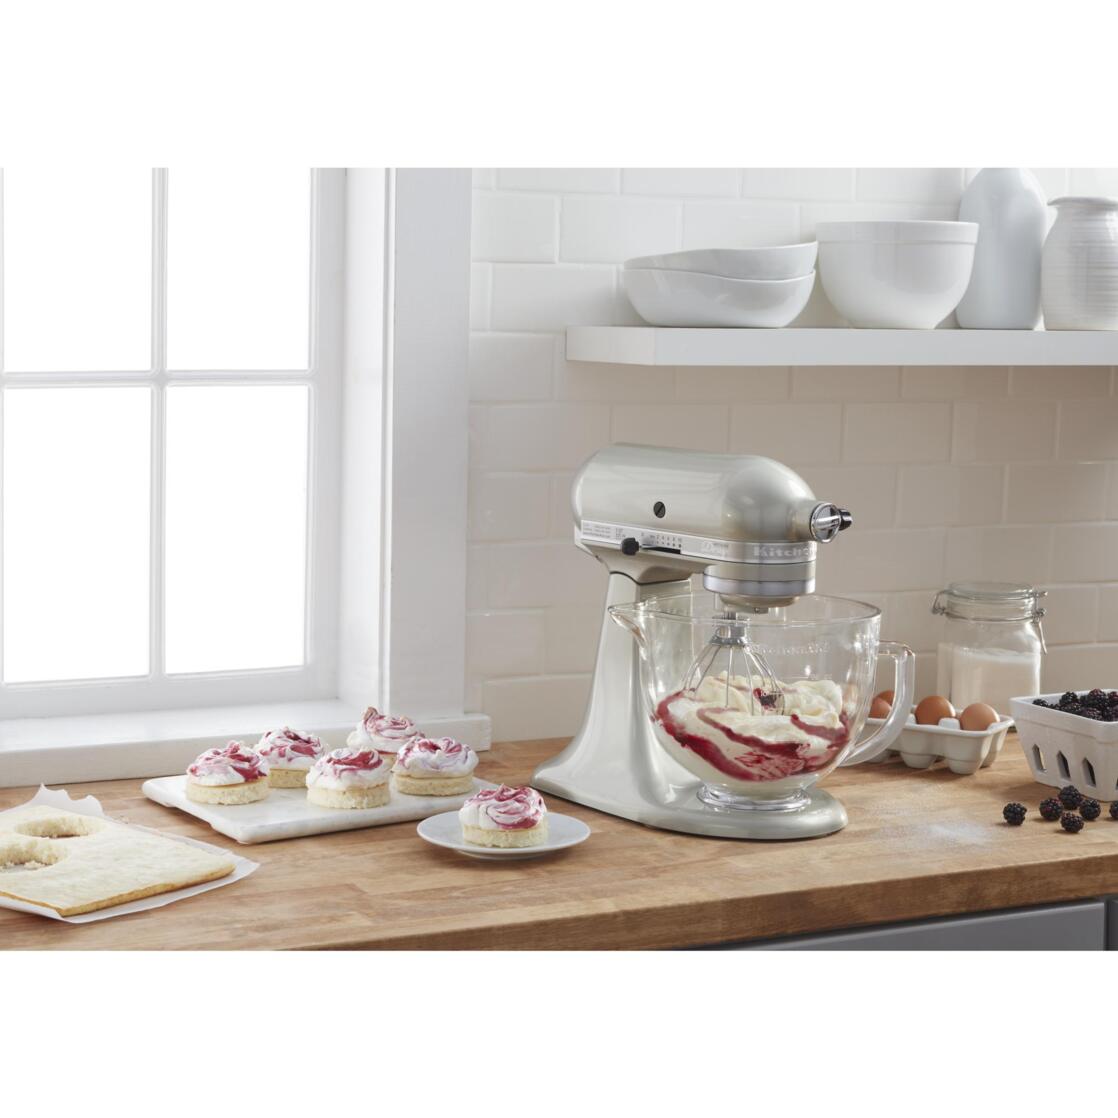 KitchenAid Artisan Design Stand Mixer - KSM155GB - image 5 of 5